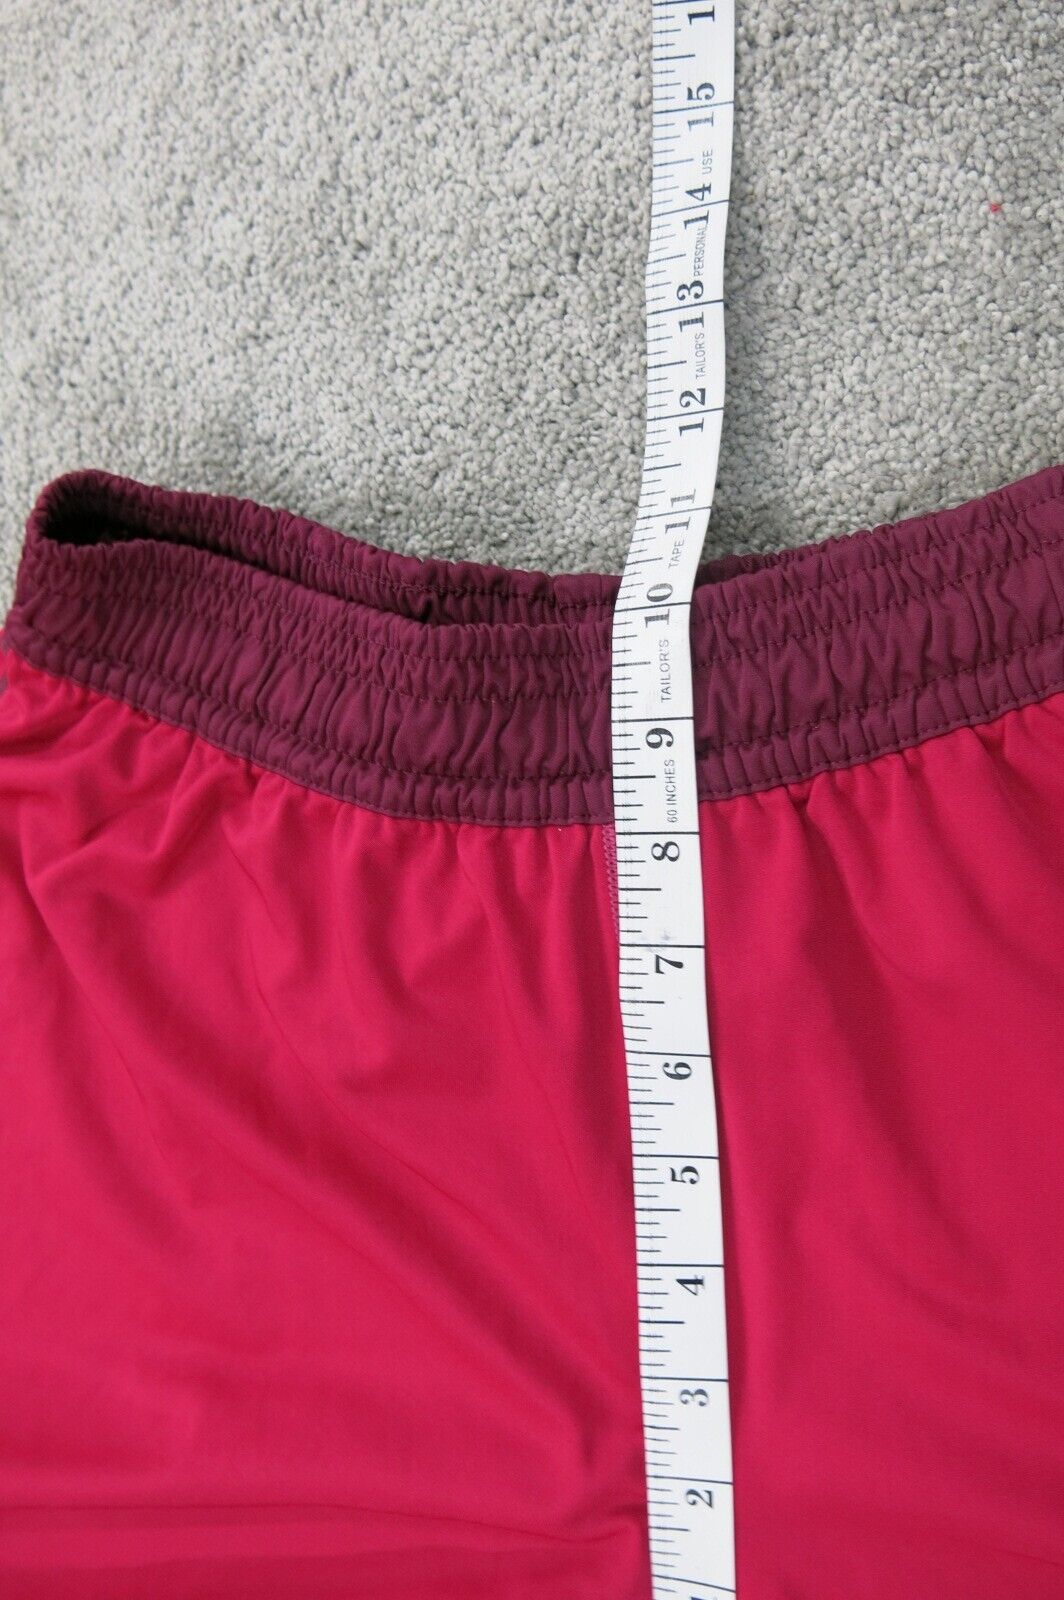 Nike Dri Fit Womens Athletic Running Shorts Elastic Waist Logo Pink Size Small